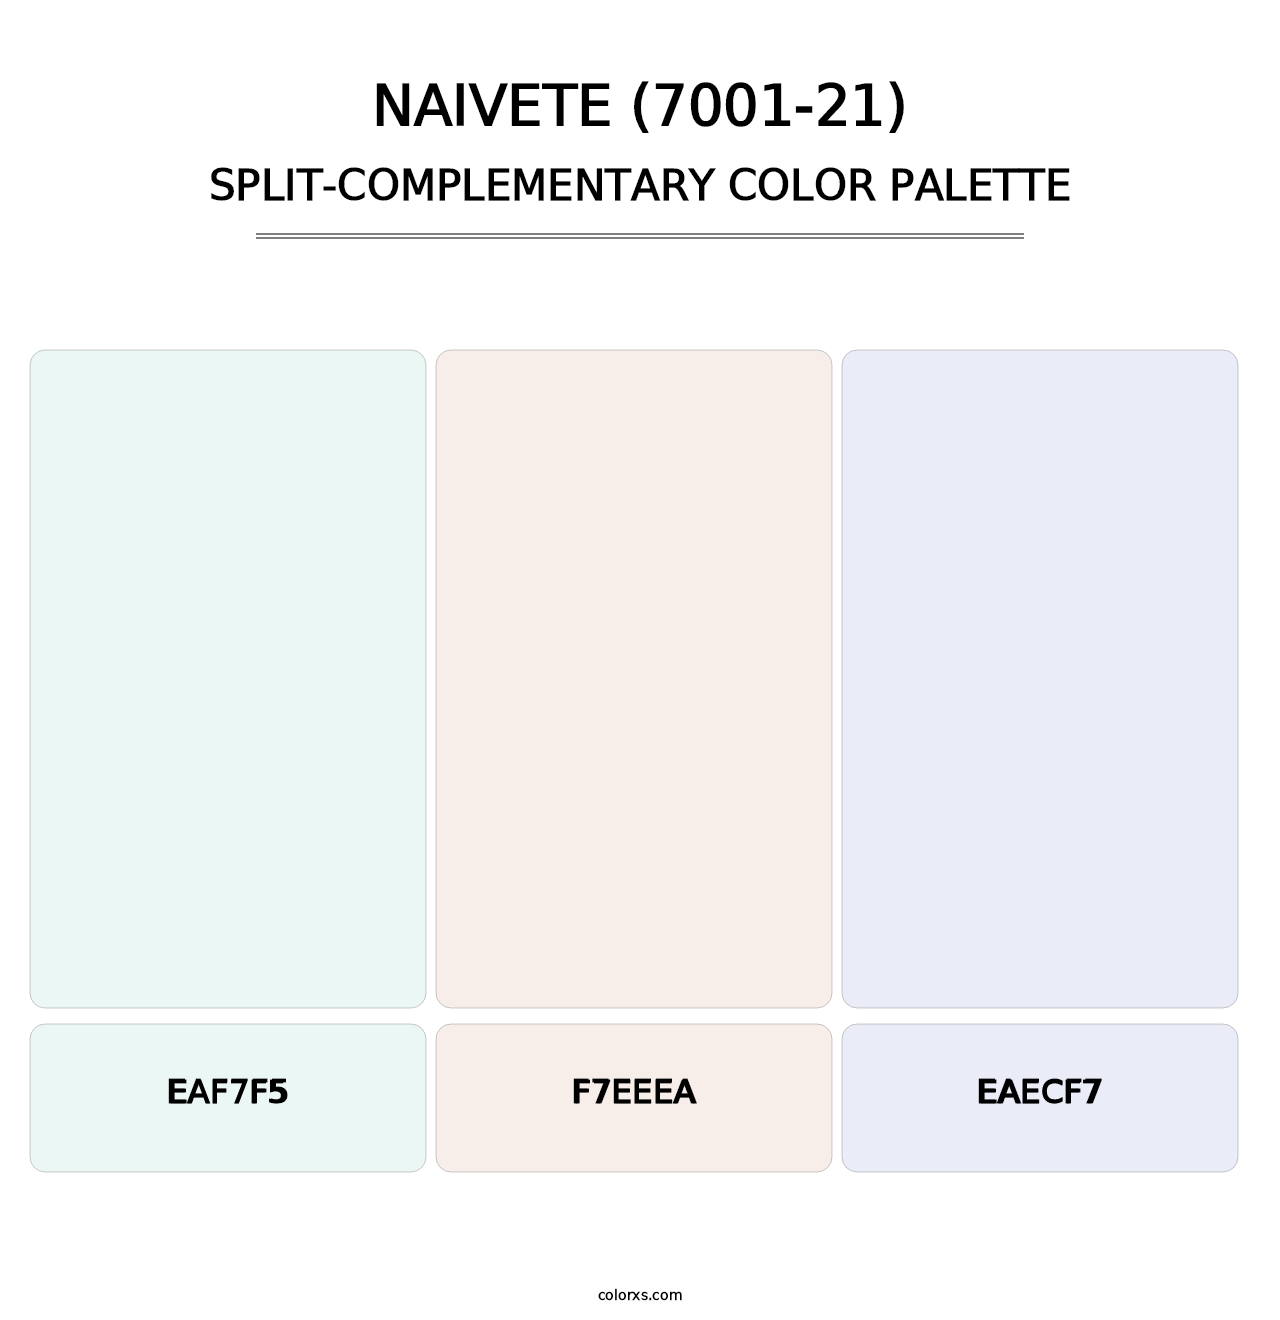 Naivete (7001-21) - Split-Complementary Color Palette